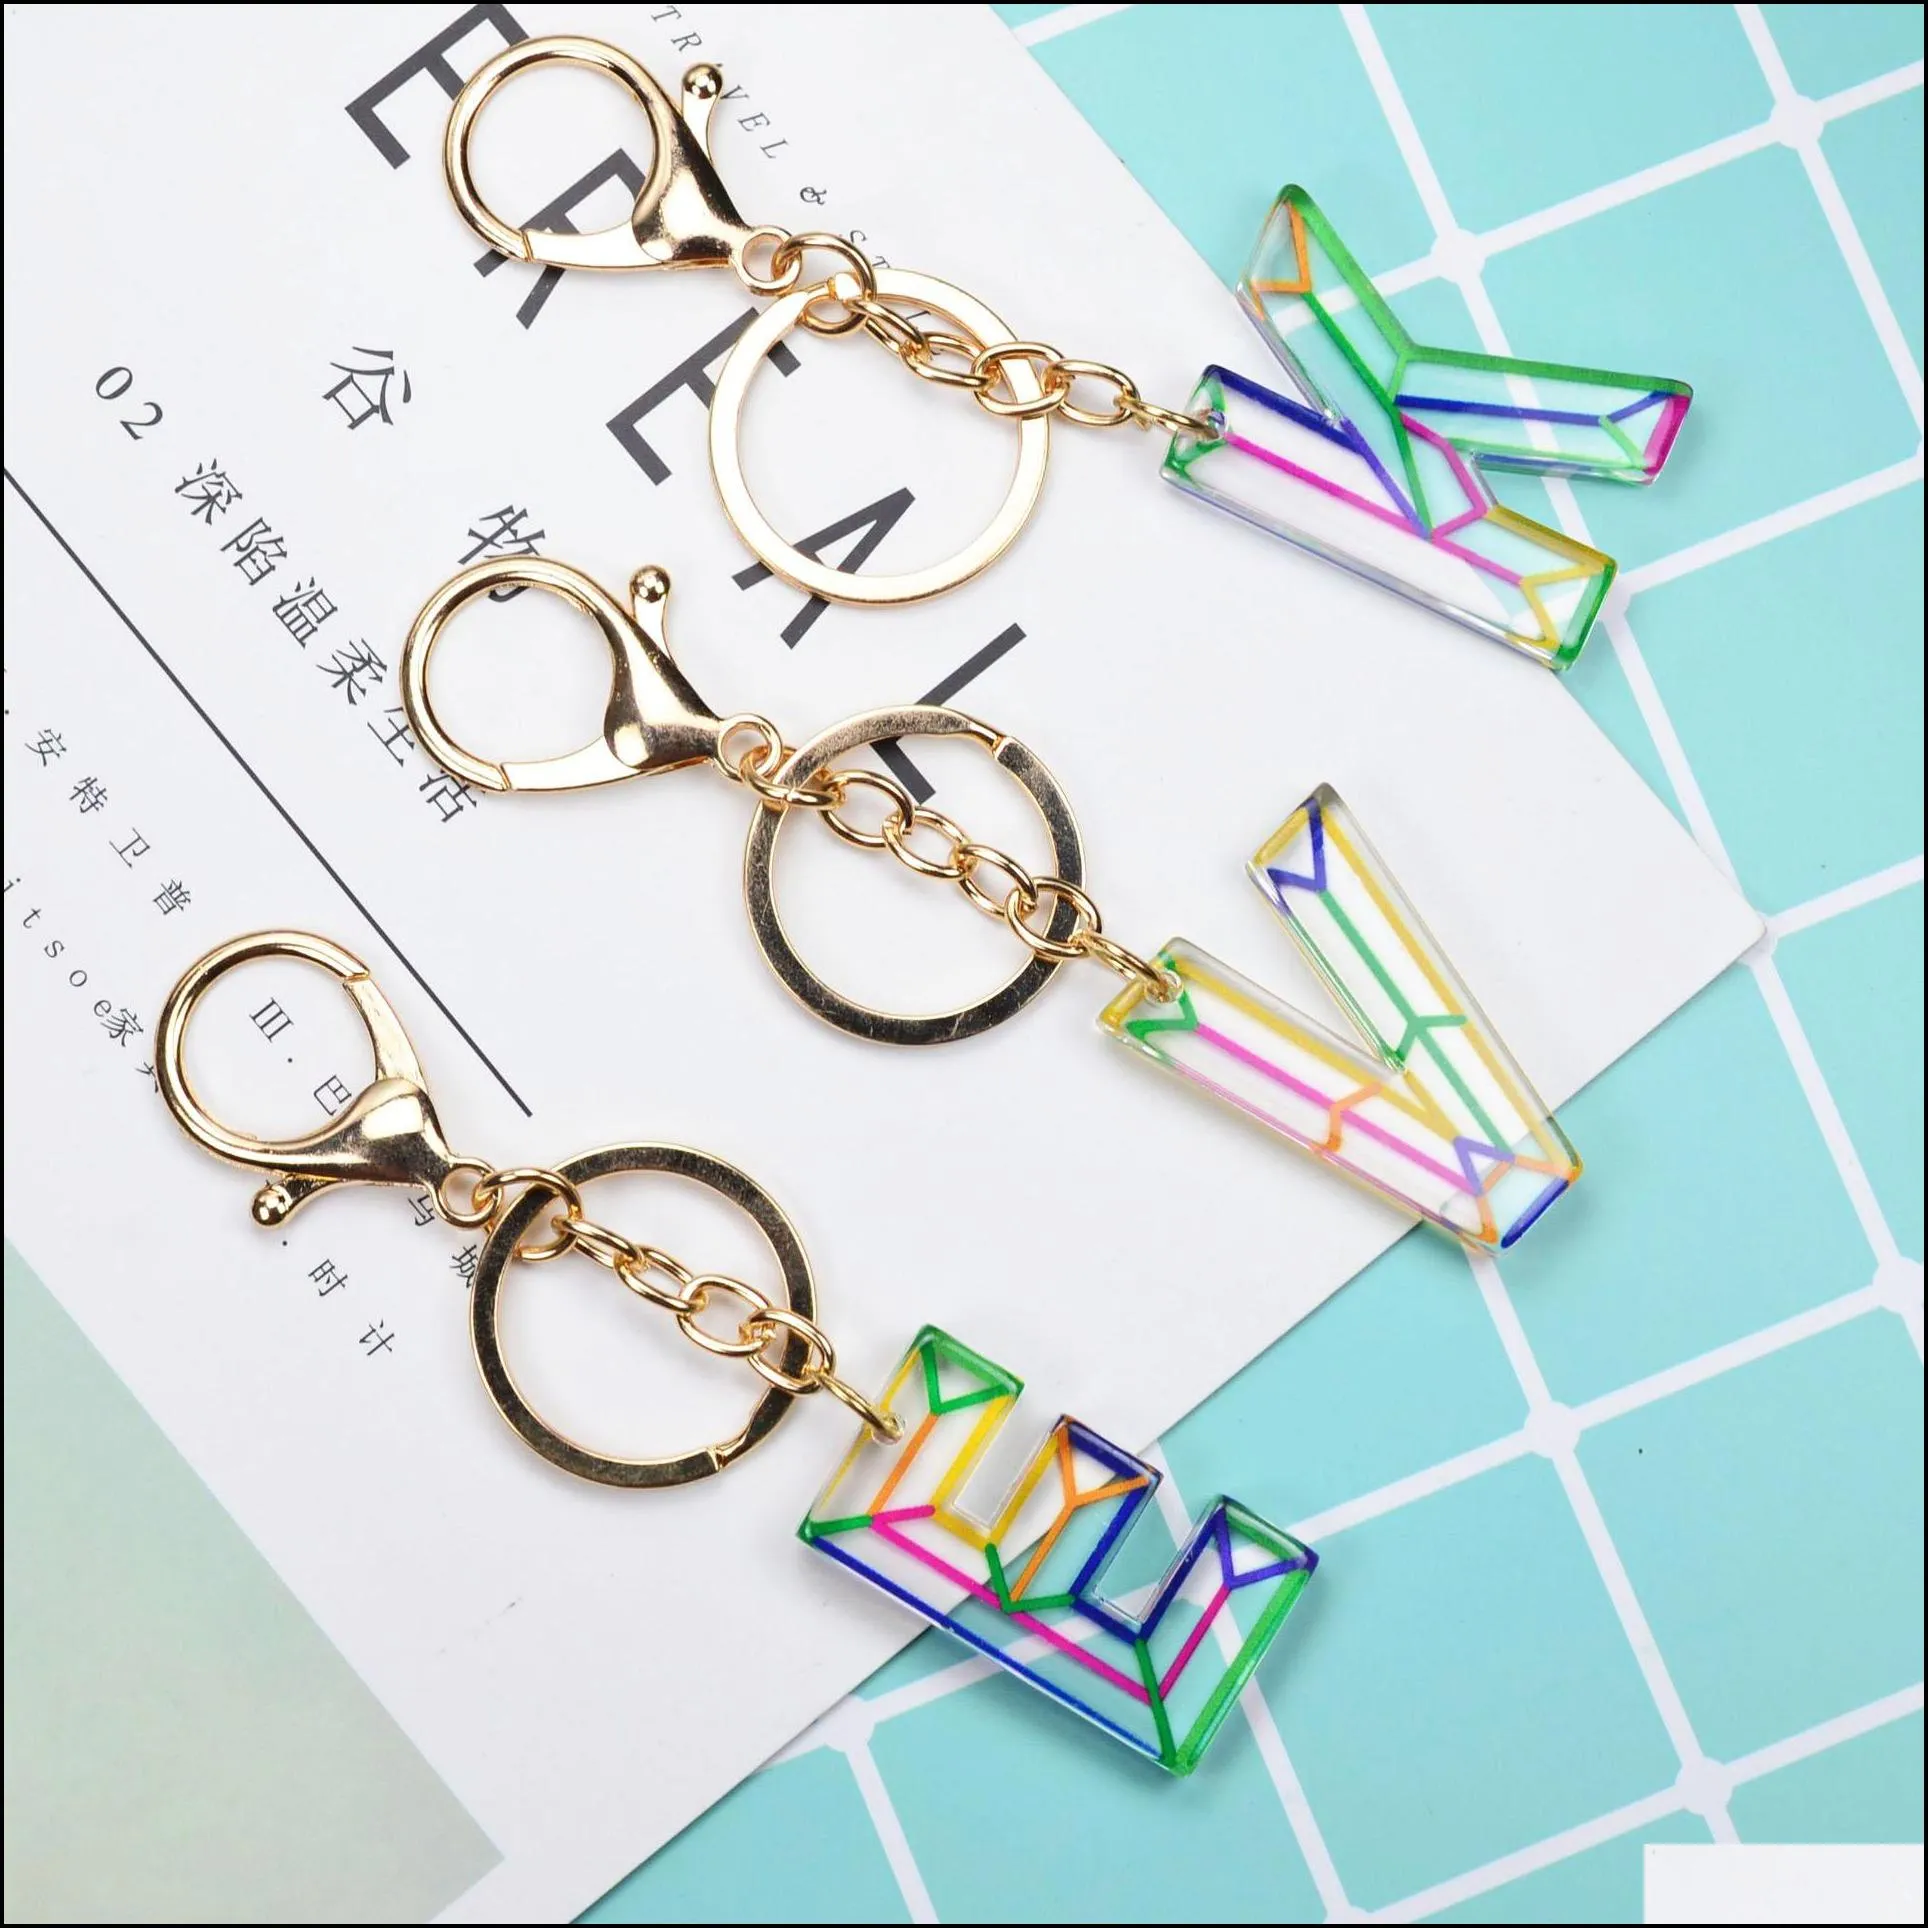 women keychains 26 acrylic rainbow words handbag english letter keyring charms